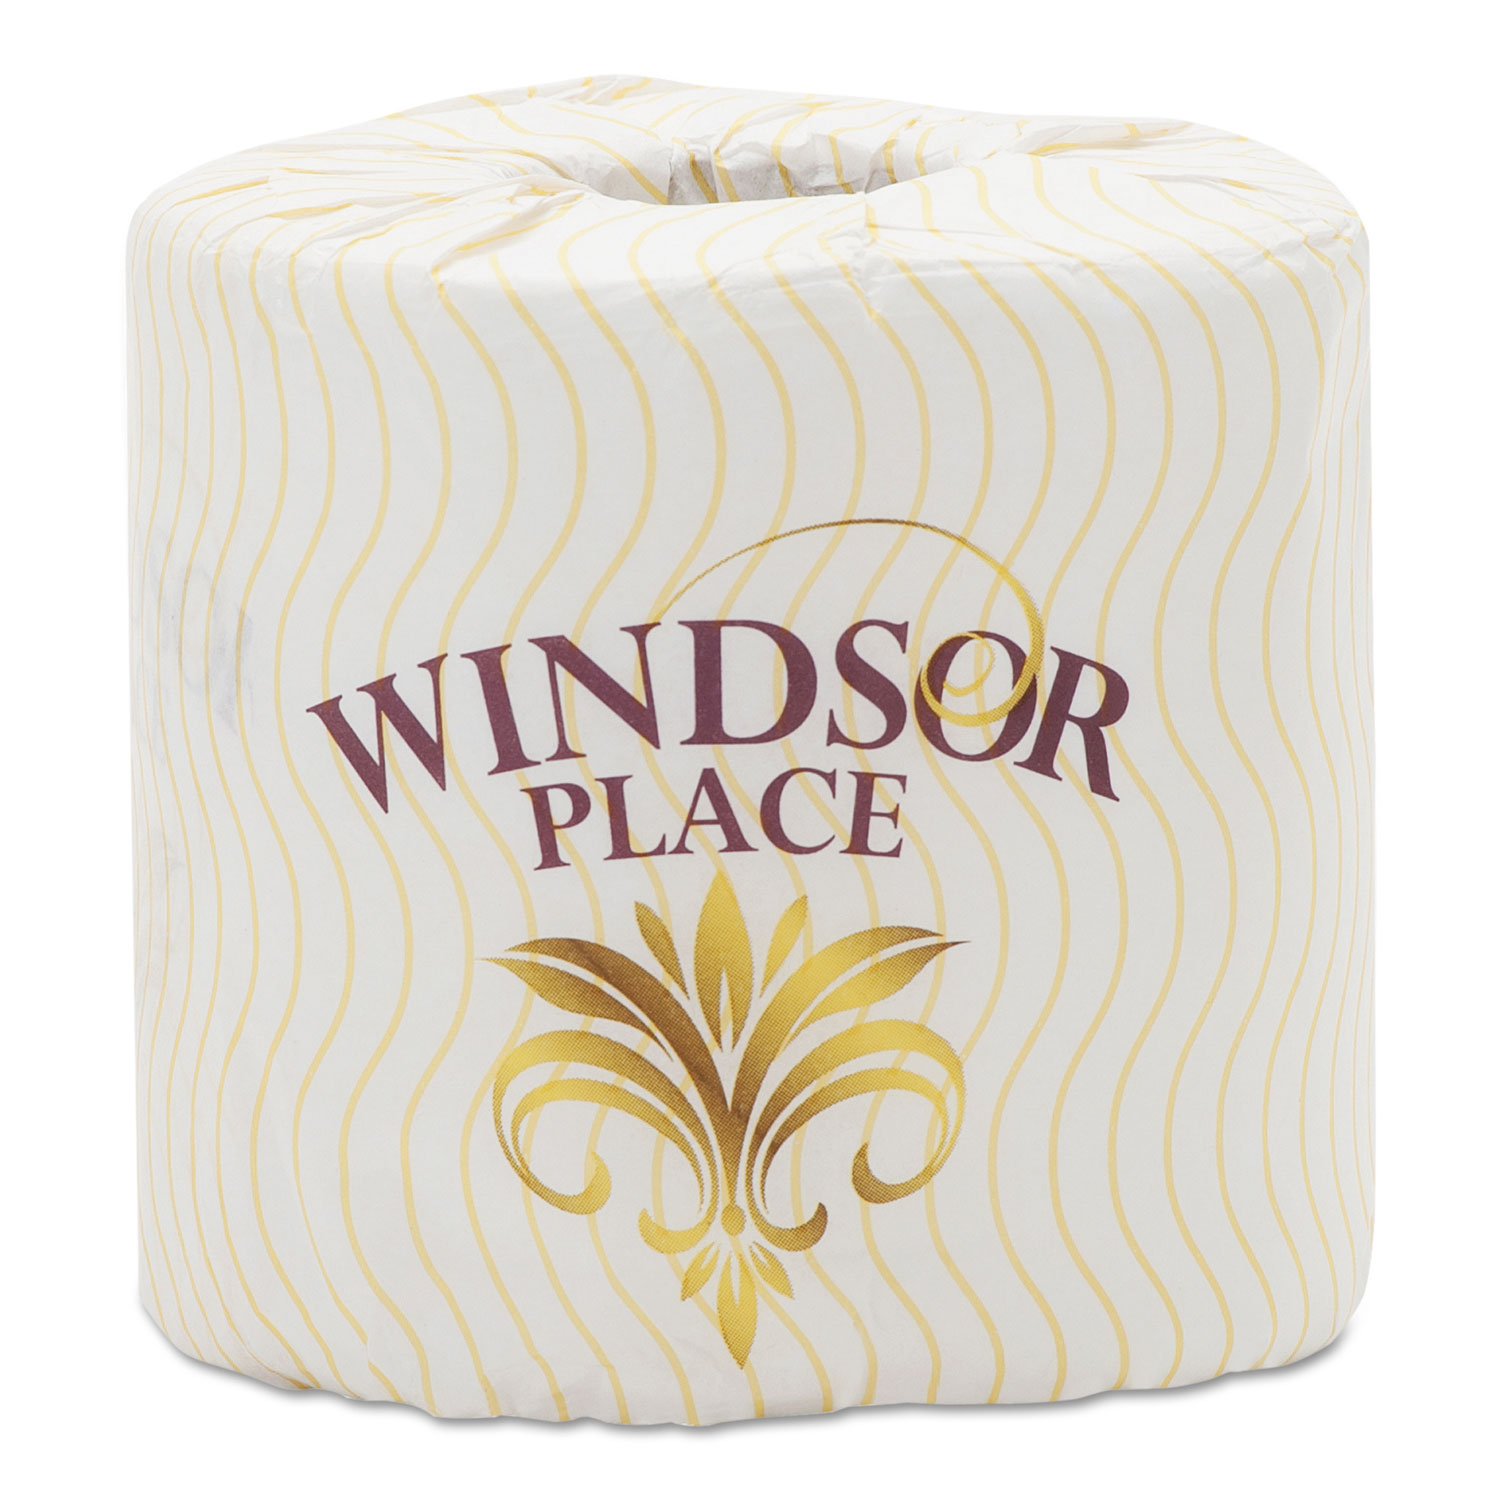 Windsor Place Premium Bathroom Tissue, 2-Ply, 4.5 x 4, 500/Roll, 80/Carton